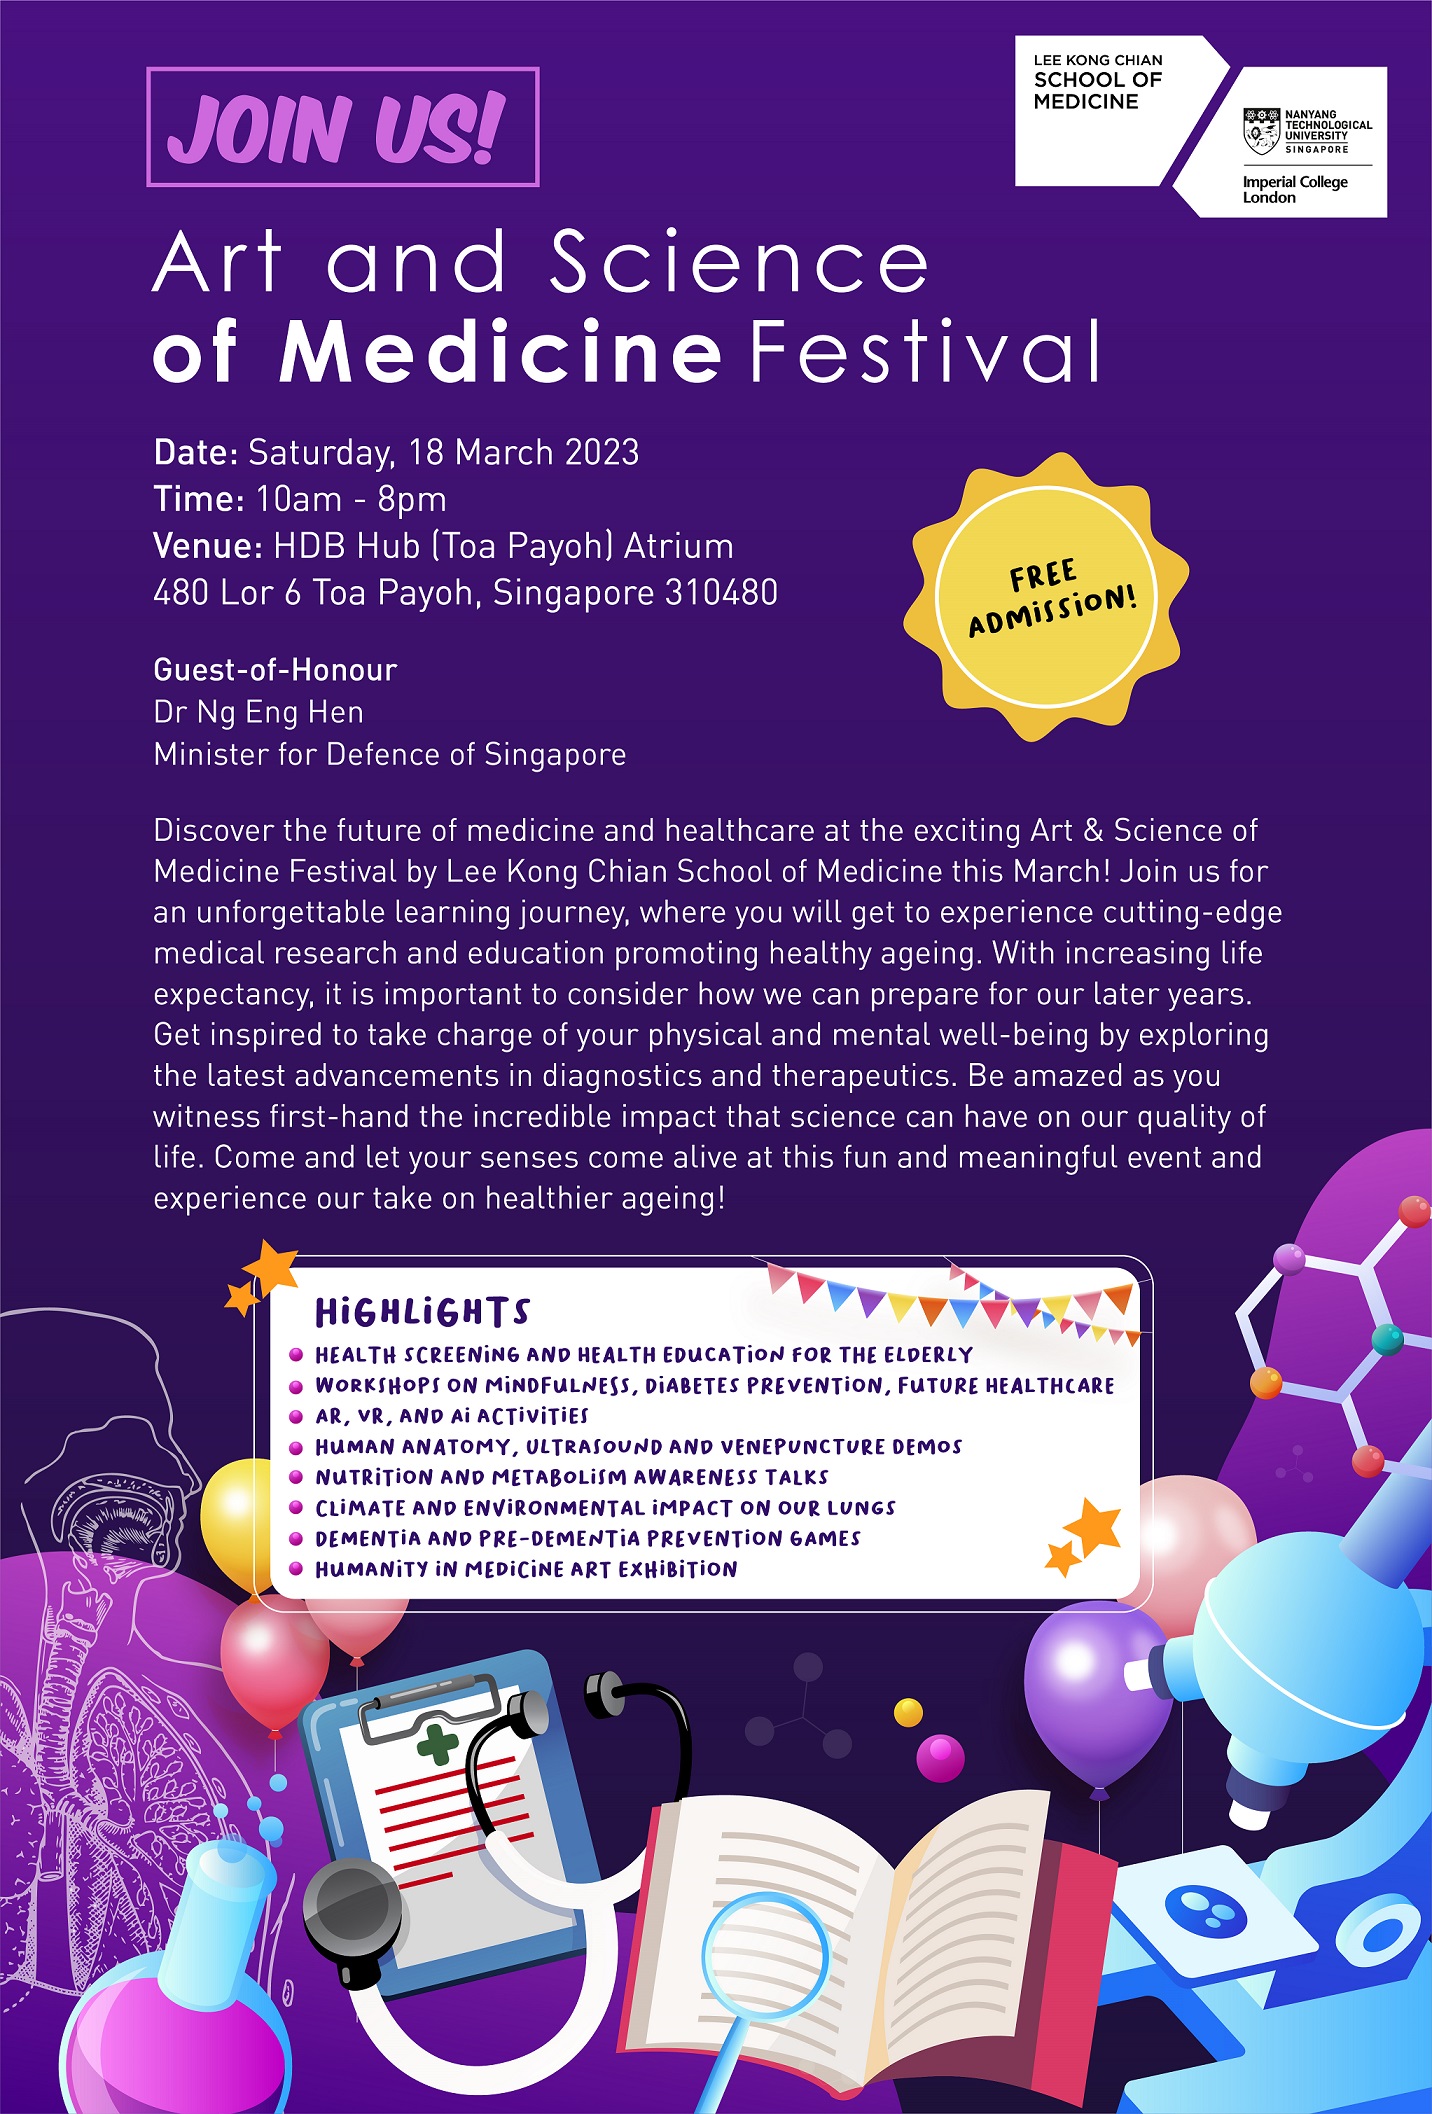 LKCMedicine Art and Science of Medicine Festival